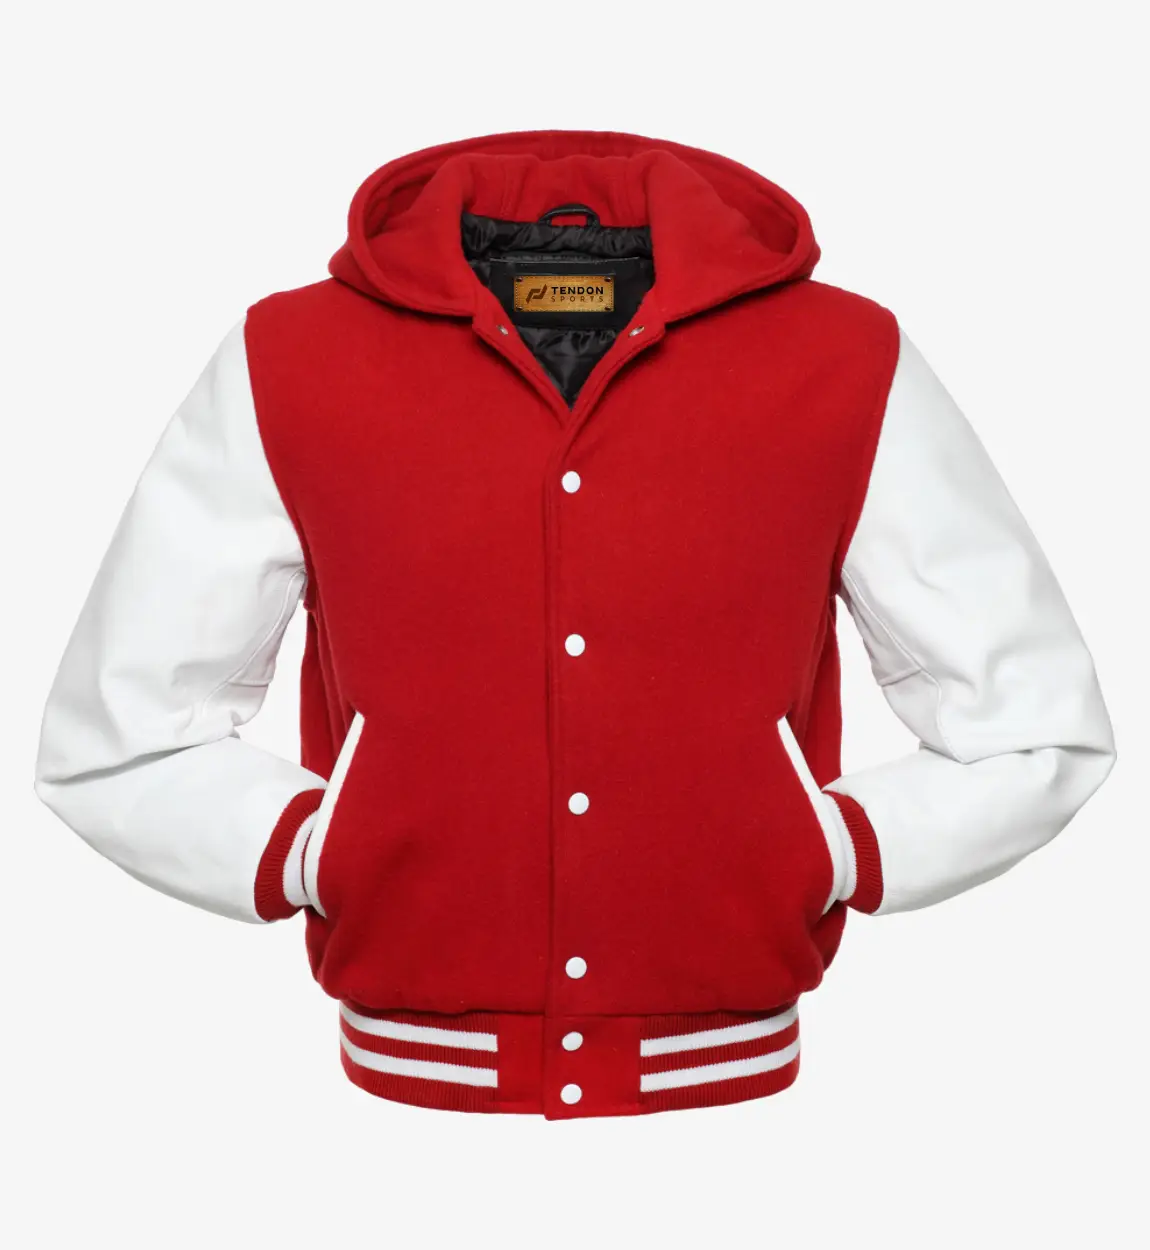 Tendon_sports_Hooded_Varsity_Jacket (2)